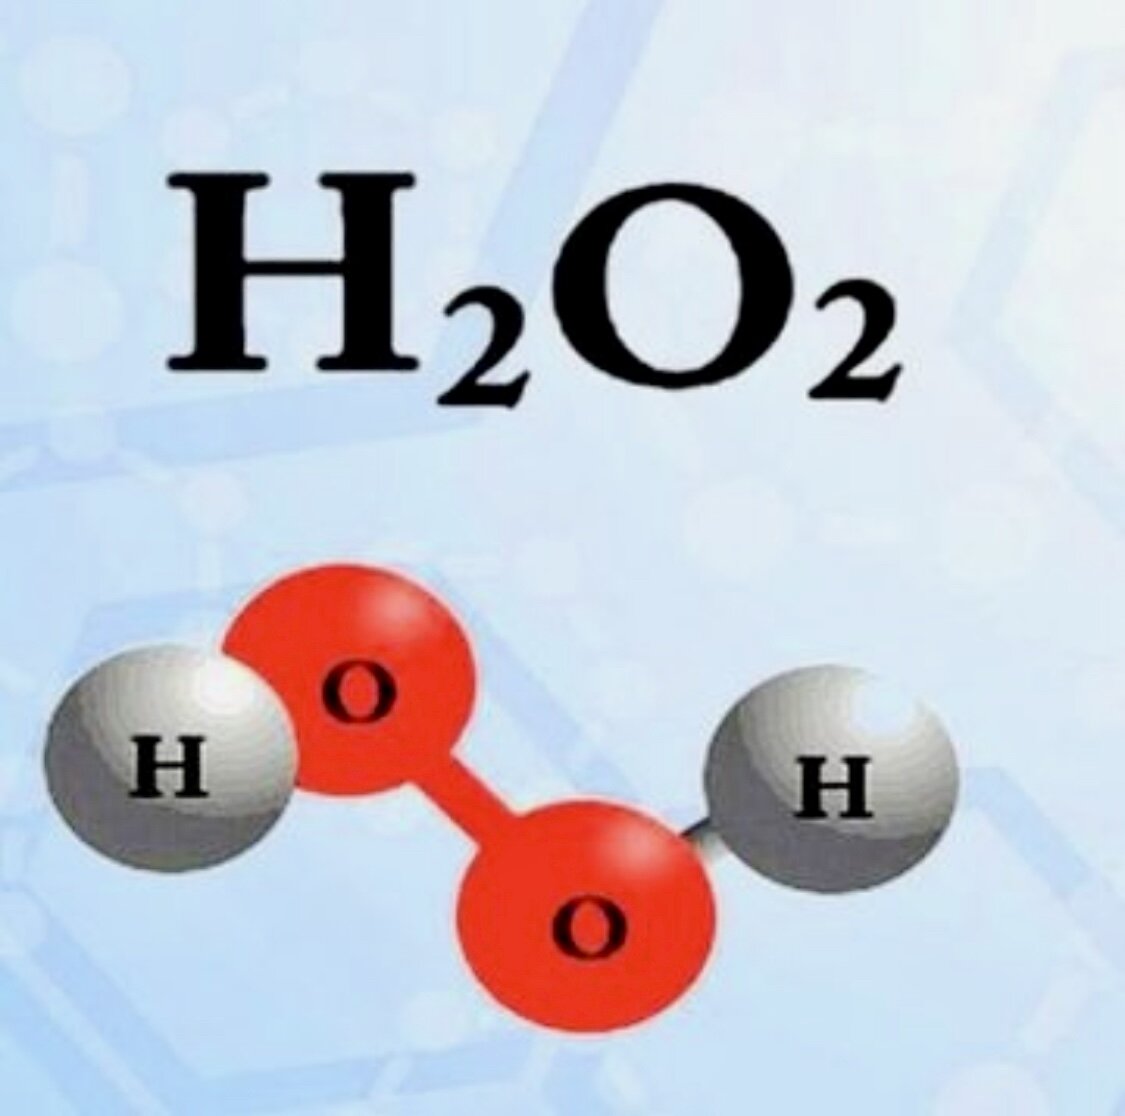 Пероксид водорода формула. Химическая формула пероксида водорода. Пероксид водорода формула химическая. Раствор пероксида водорода формула. Строение пероксида водорода